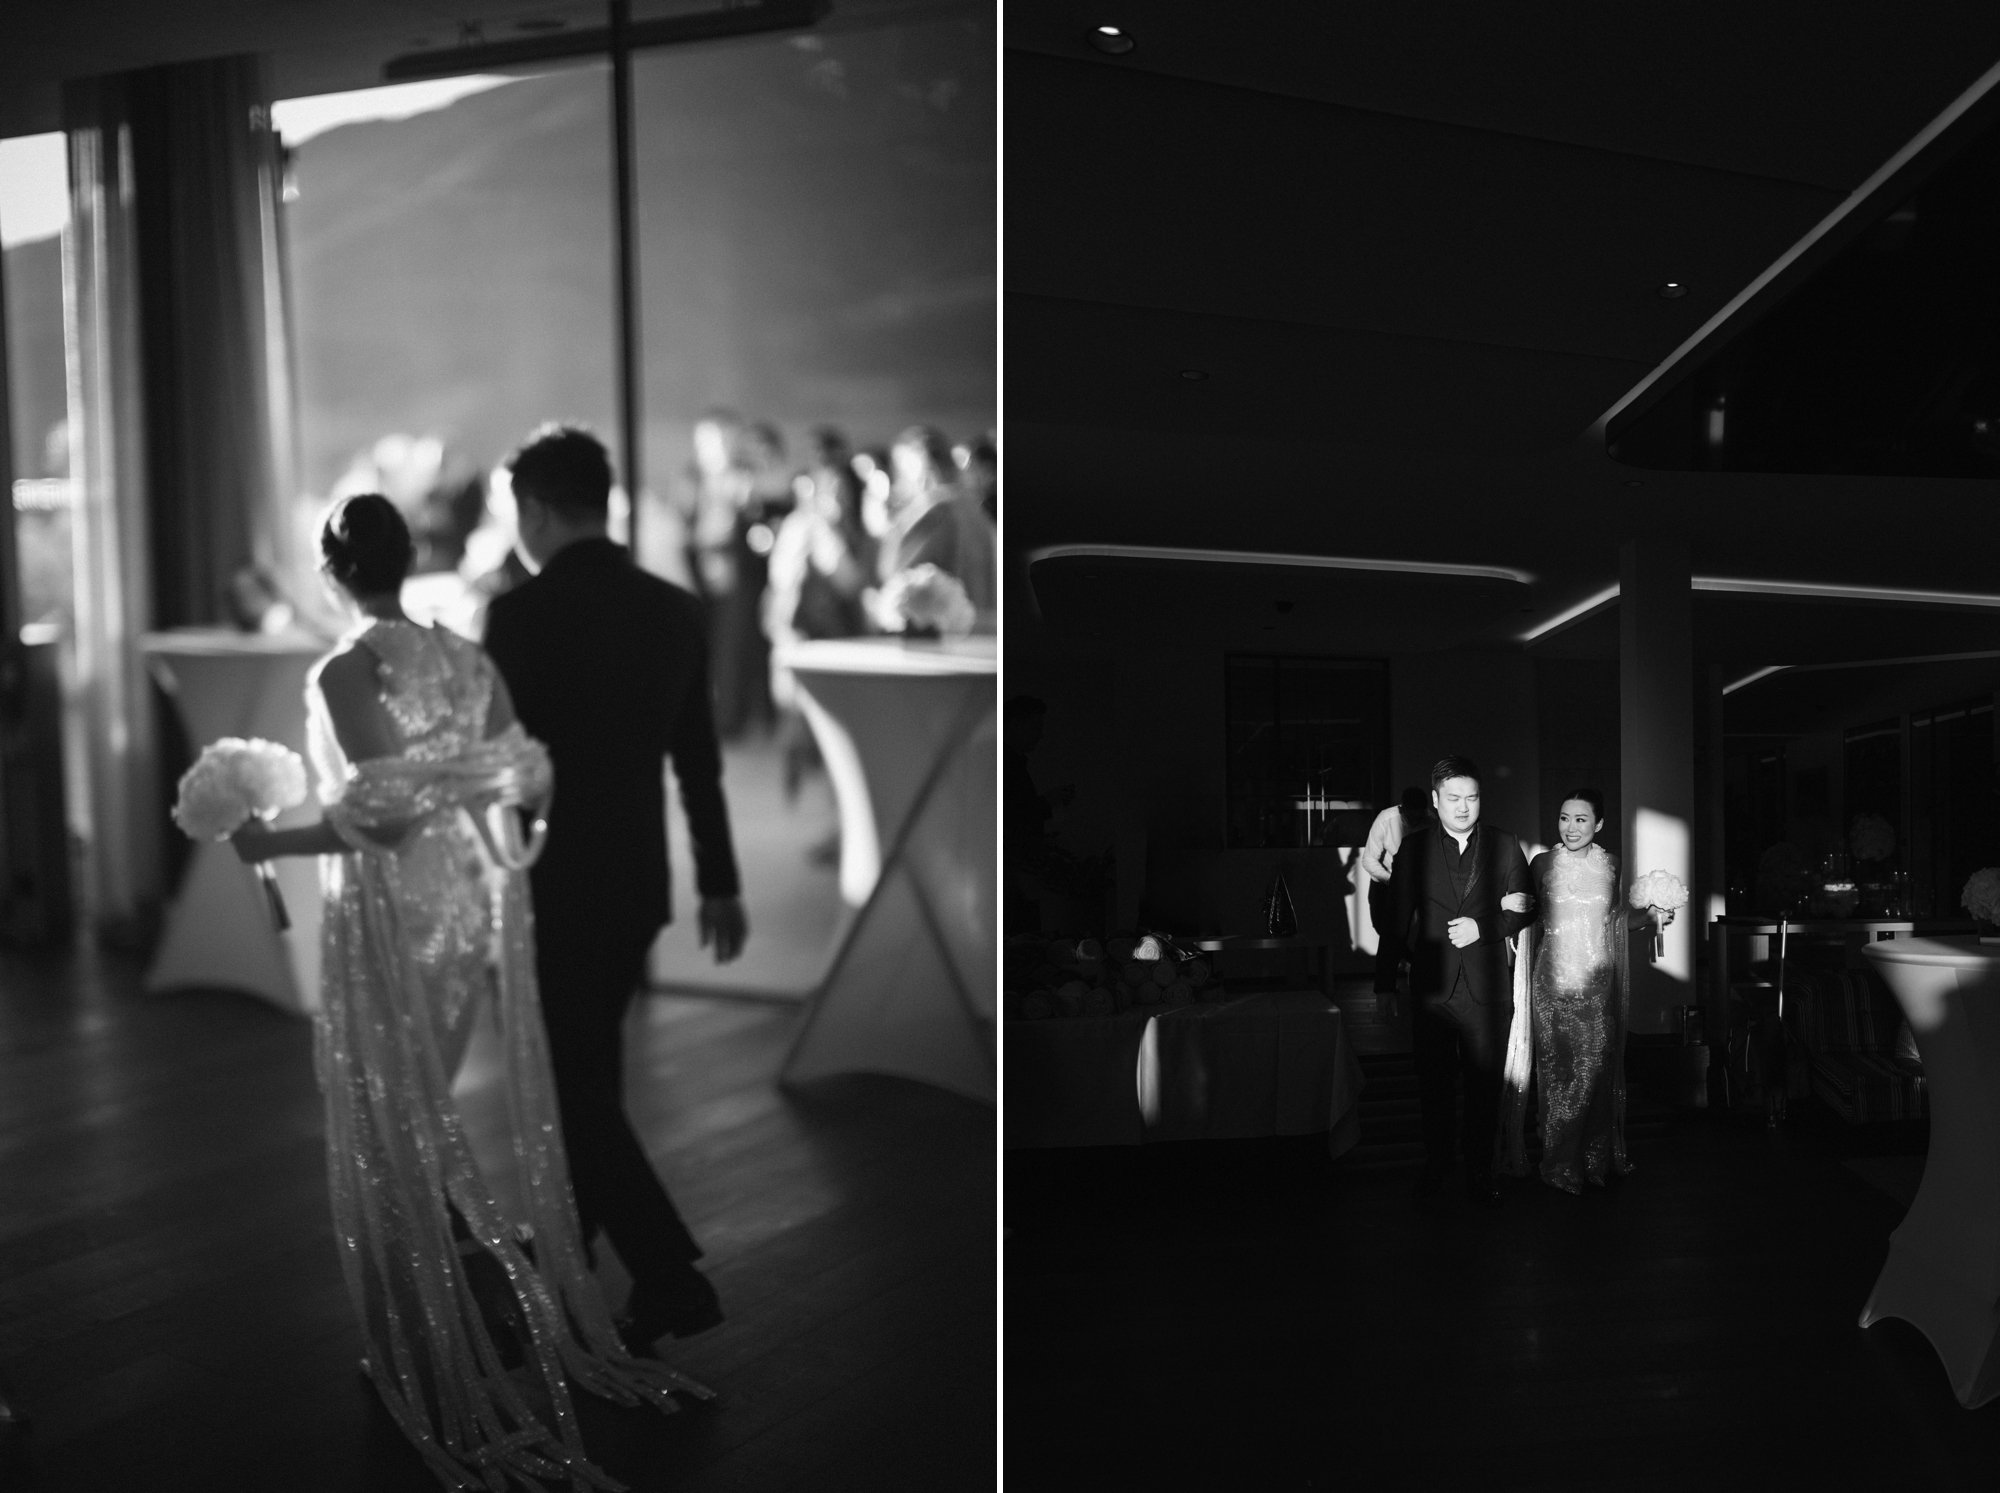 Prawira-Evelyn-Dolomites-Italy-Santre wedding-Yefta Gunawan-Jeriko MUA-Carol Kuntjoro Photography-111.jpg